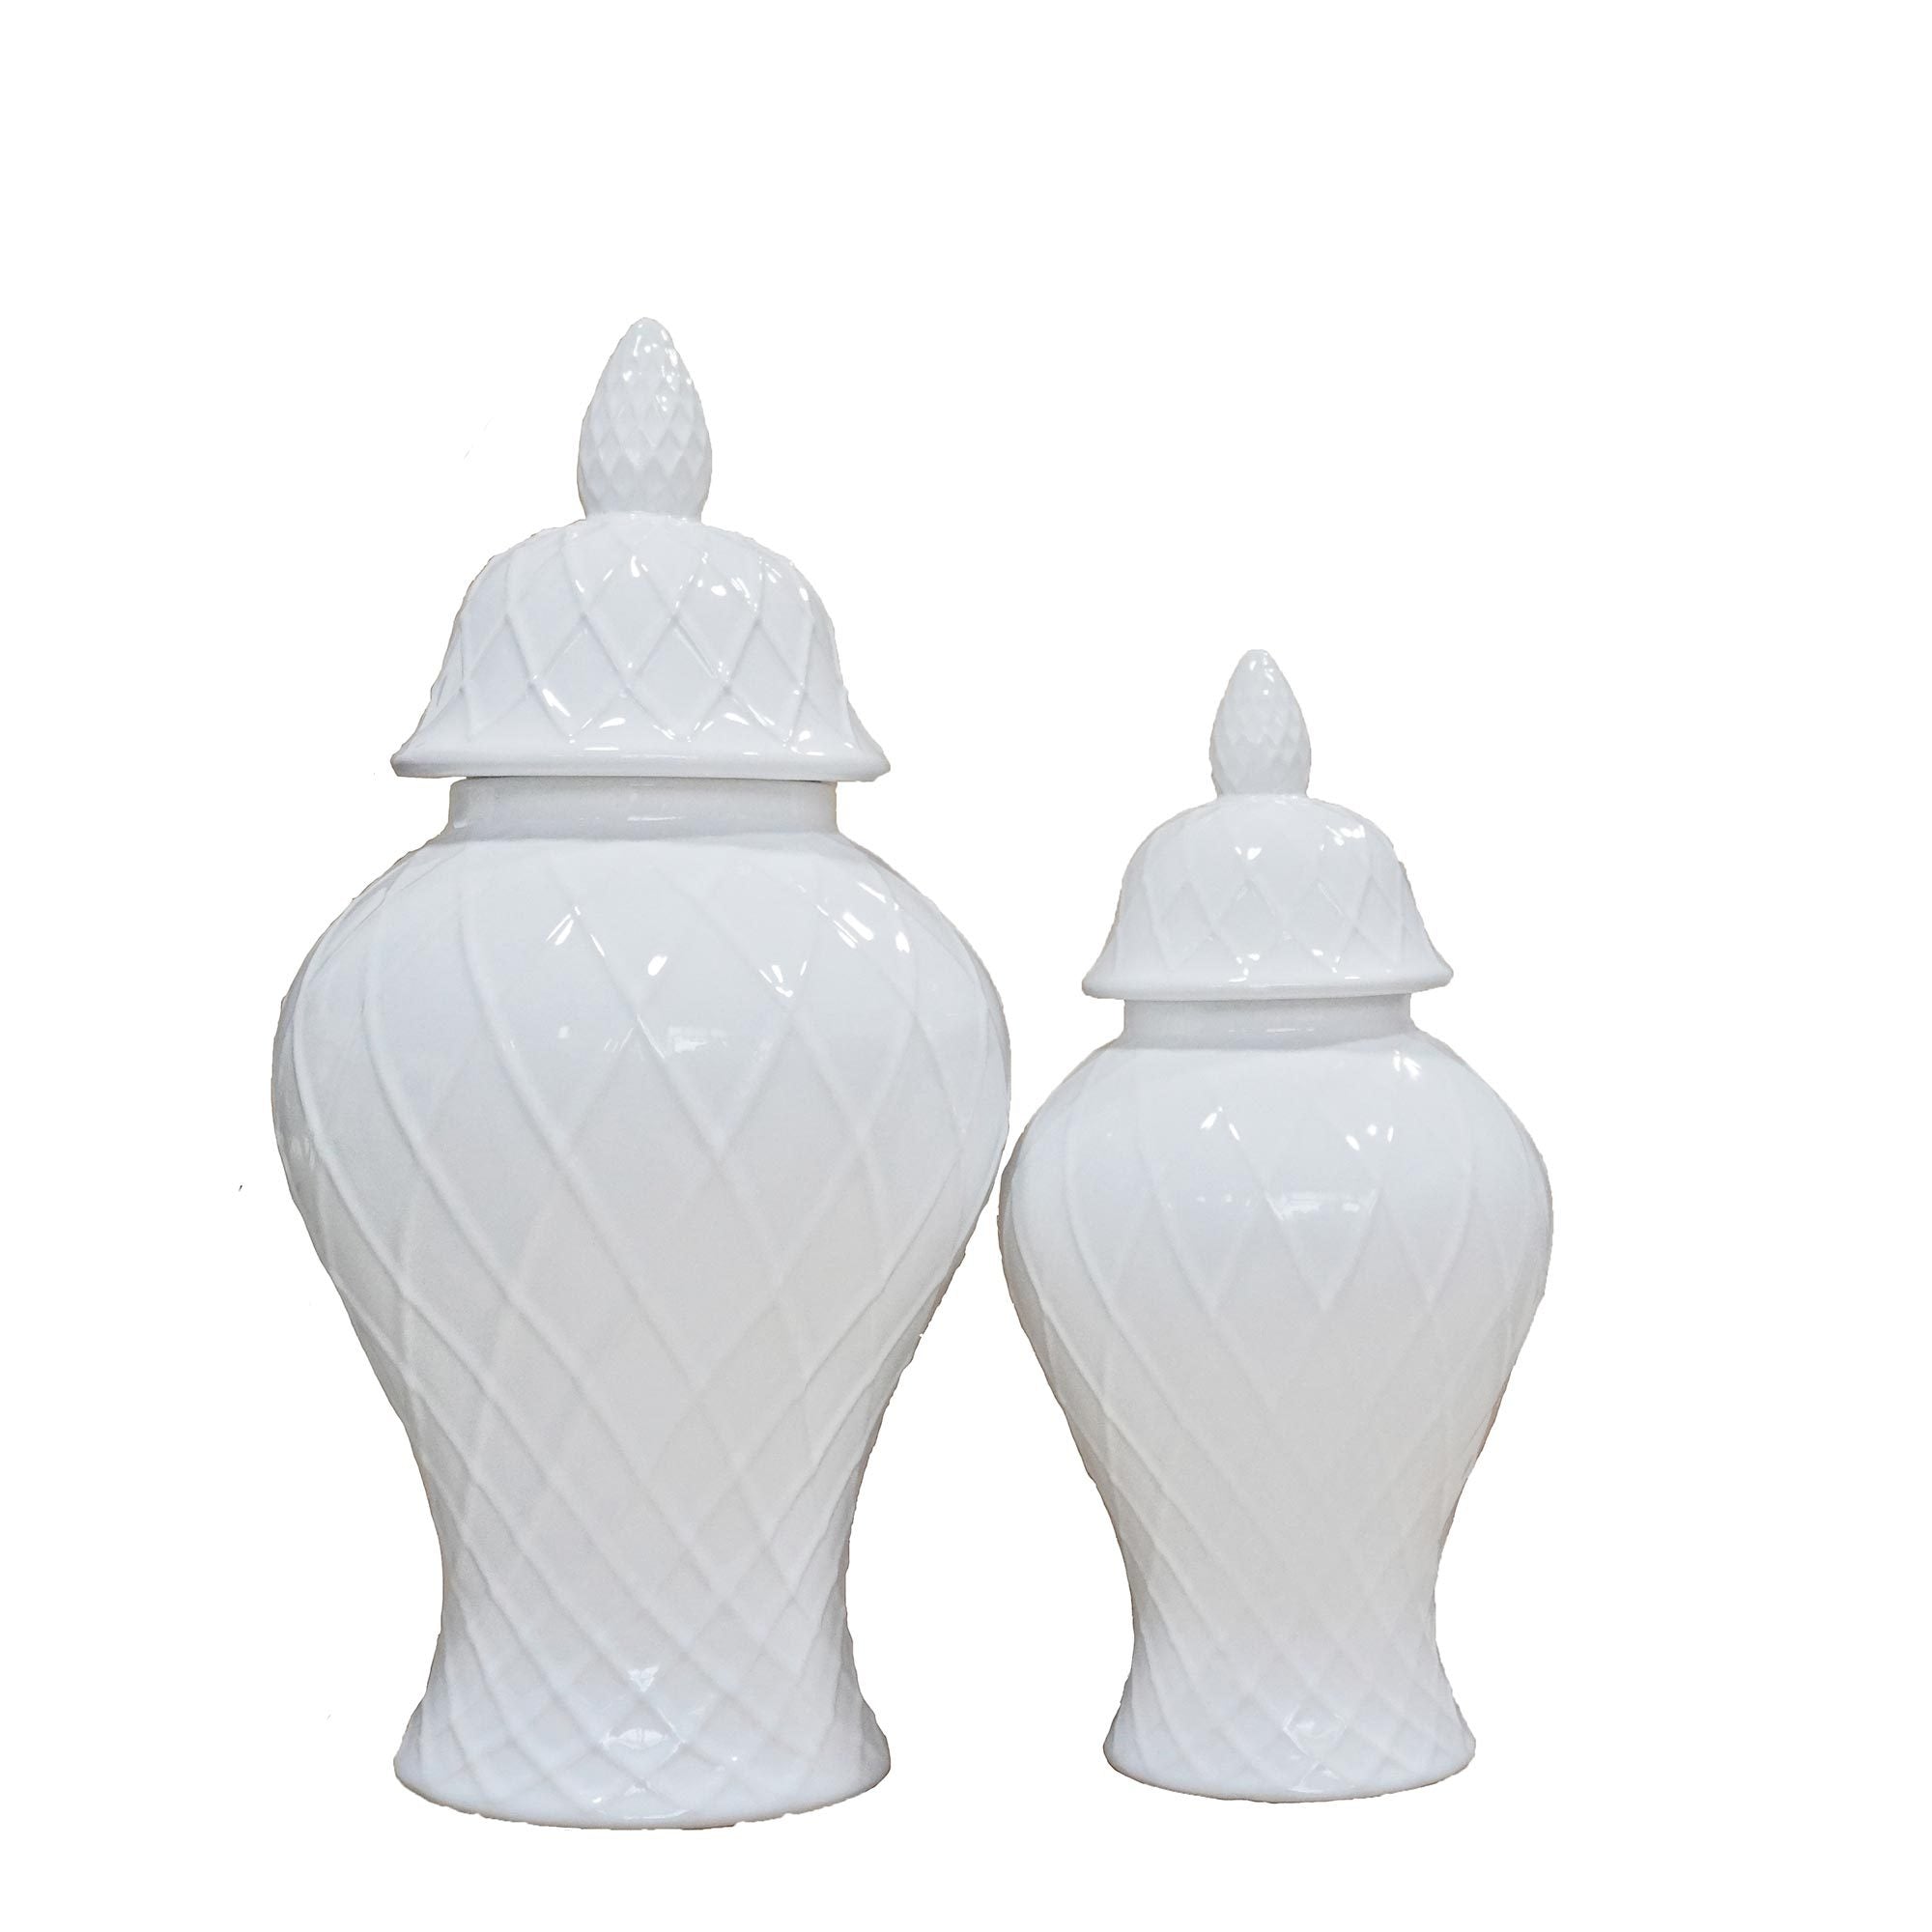 Elegant White Ceramic Ginger Jar with Decorative white-ceramic